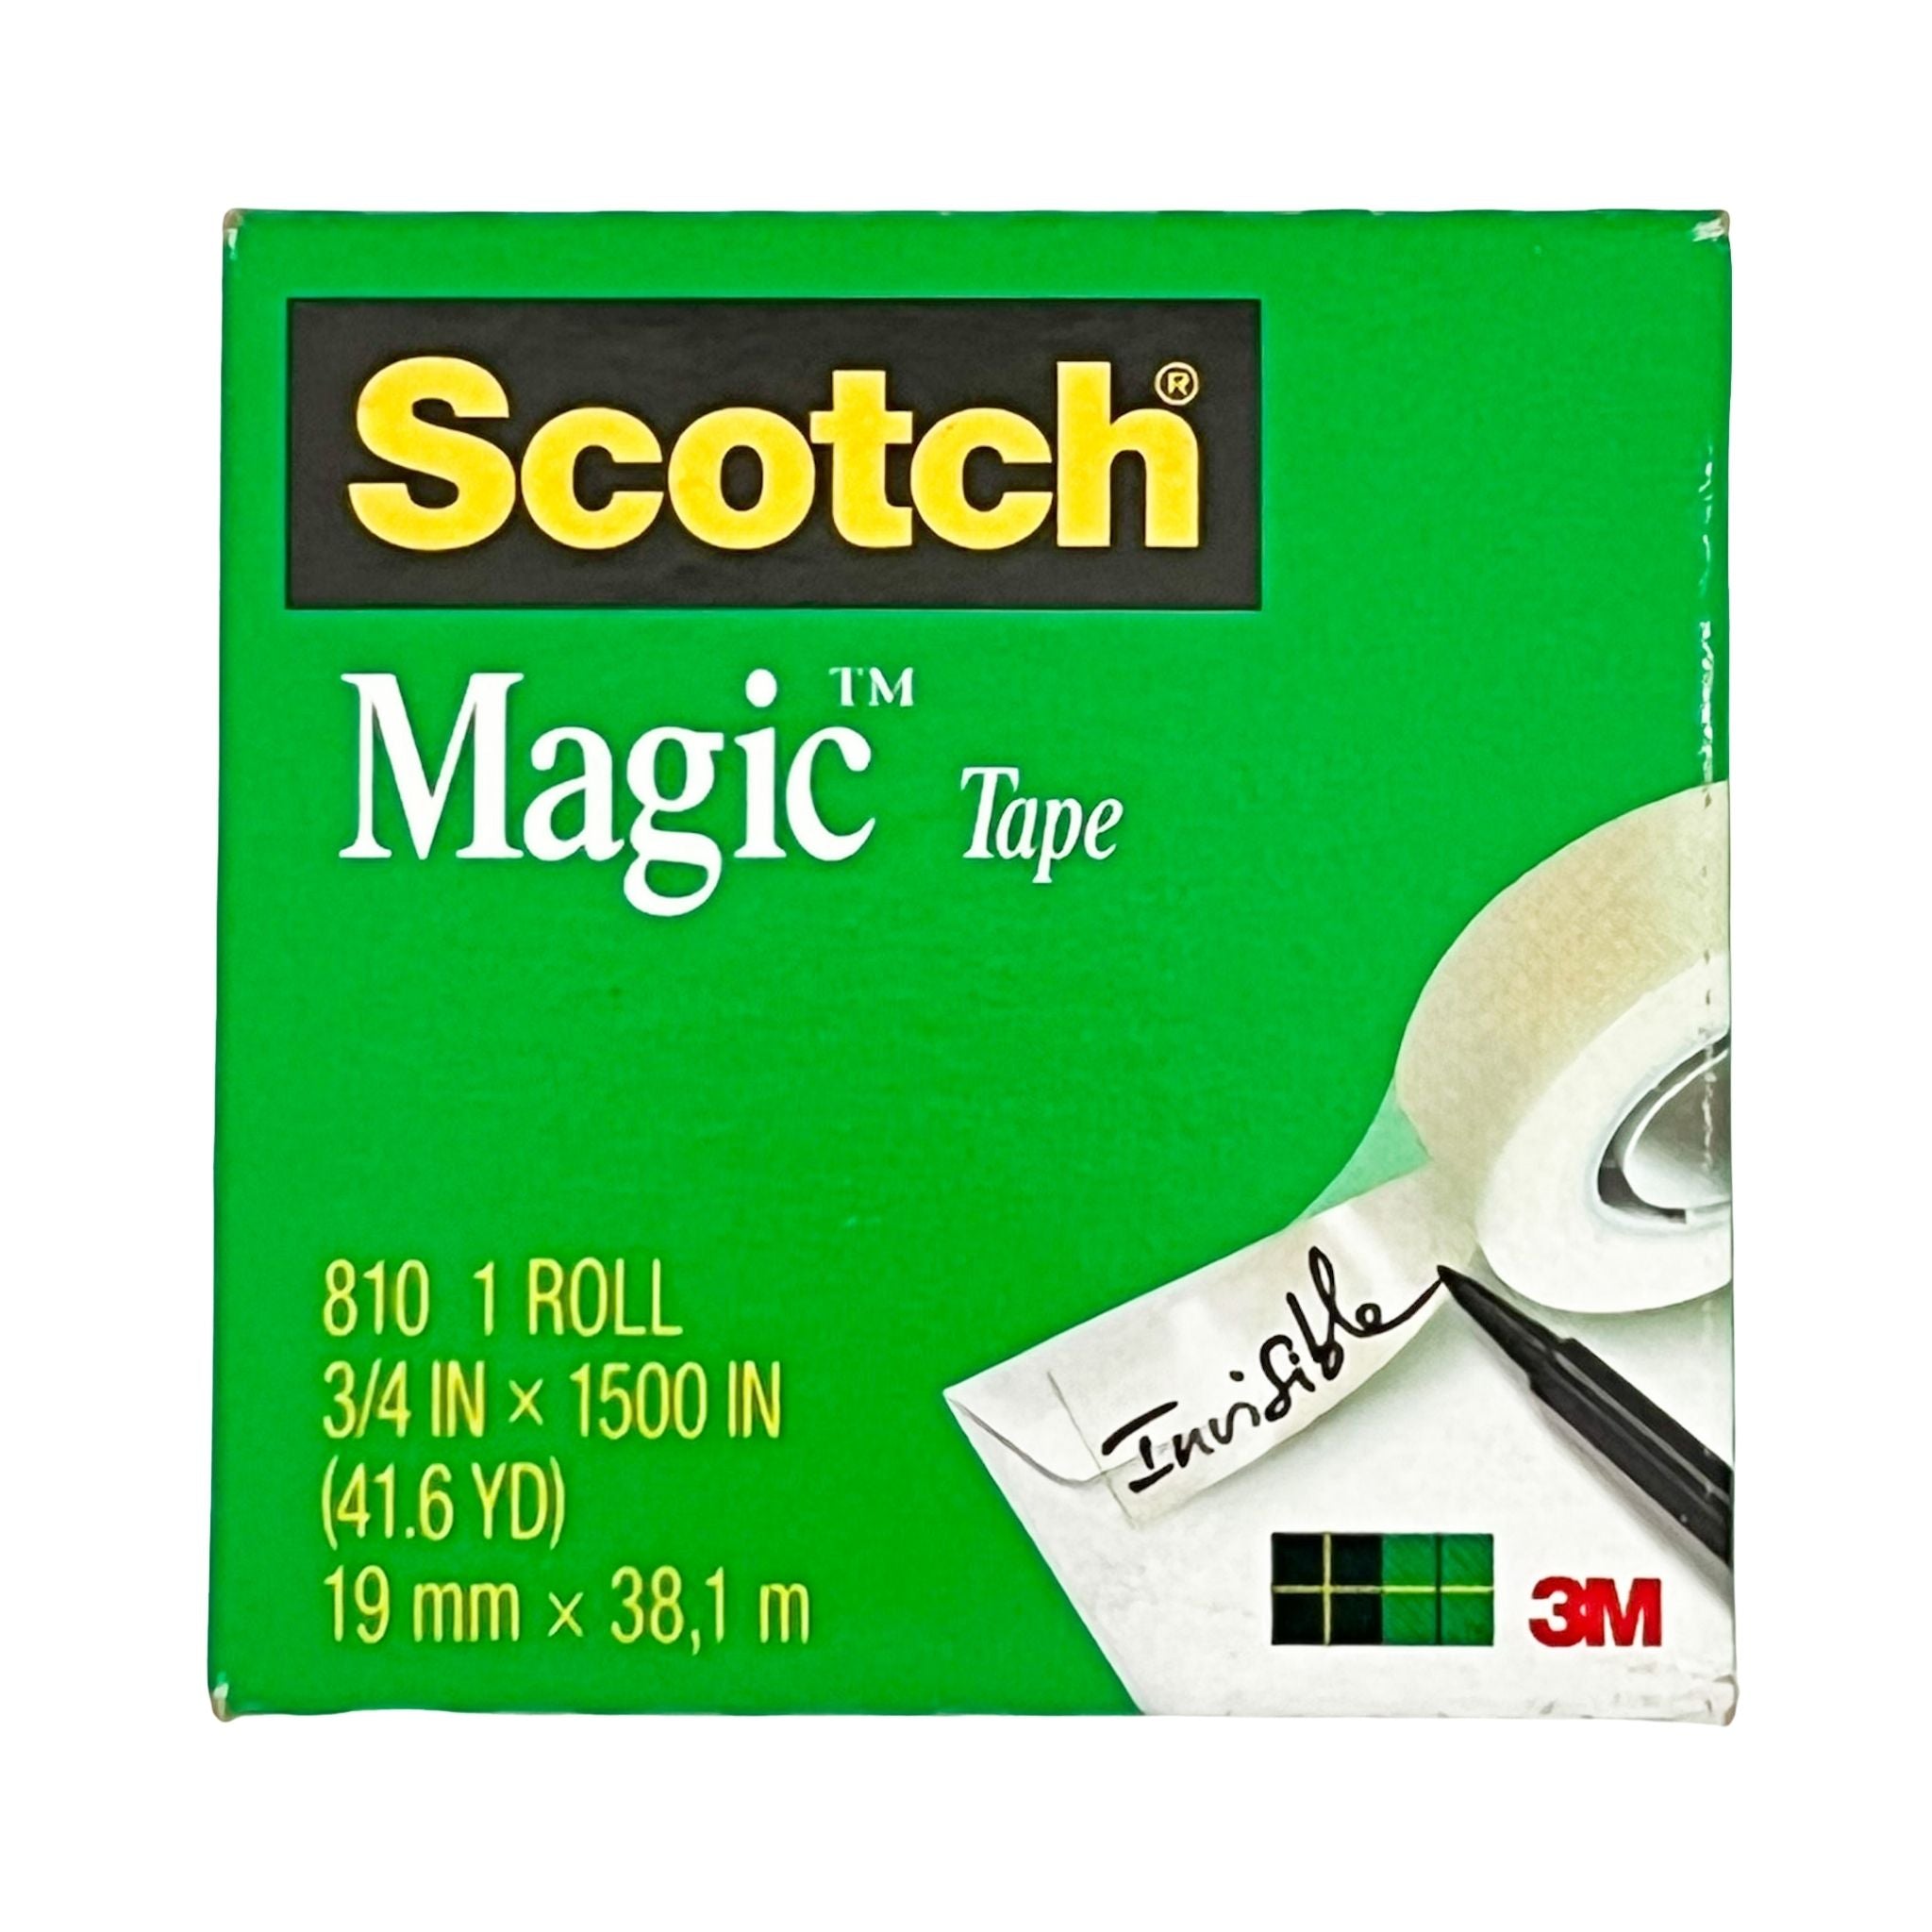 Scotch Shipping Tape 1.88 x 164